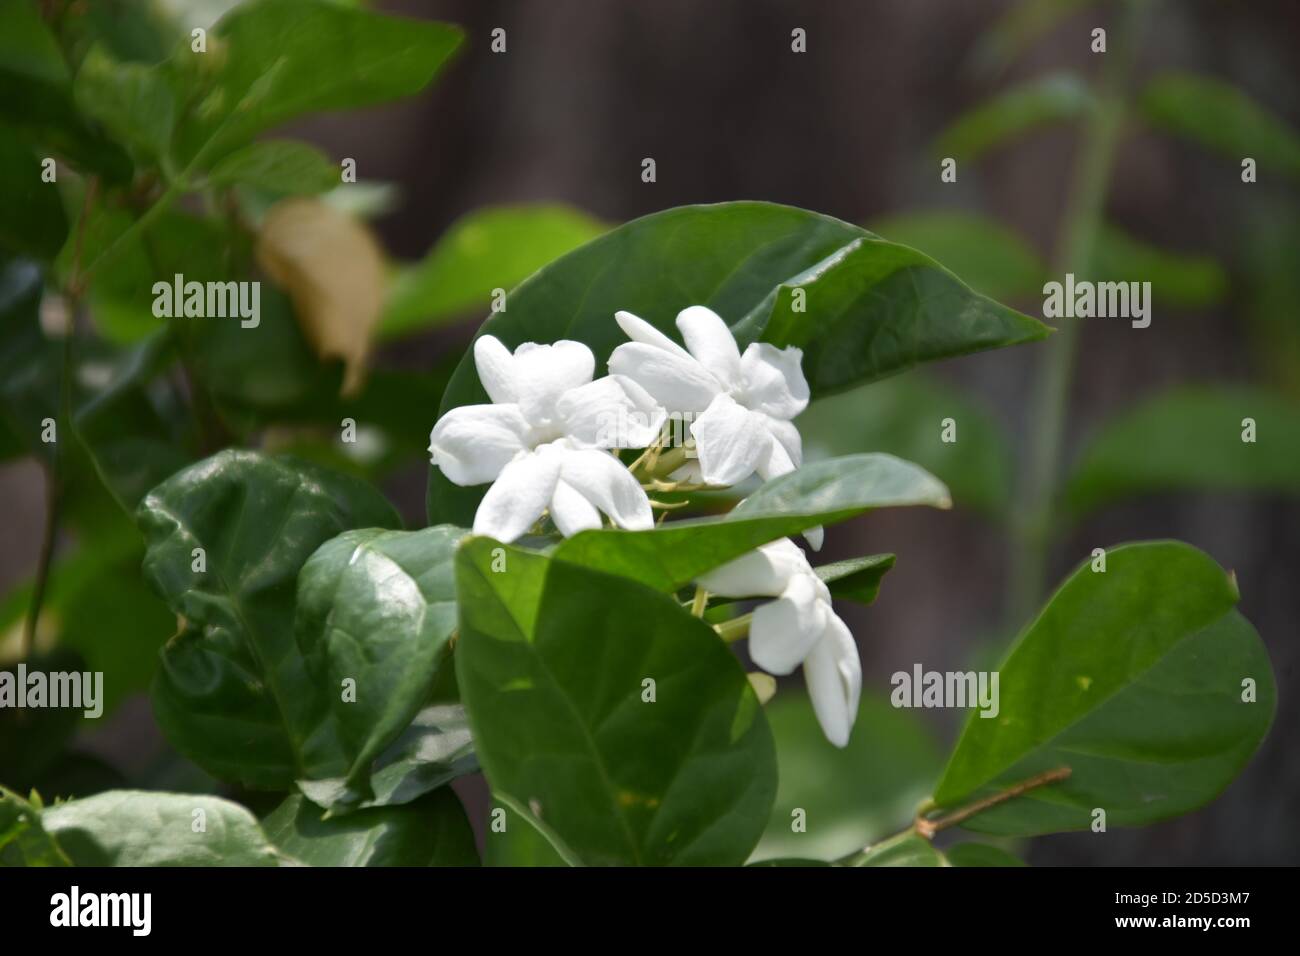 Leaf and flowers of White Jasmine or Jasminum Sambac or Sampaguita Stock Photo